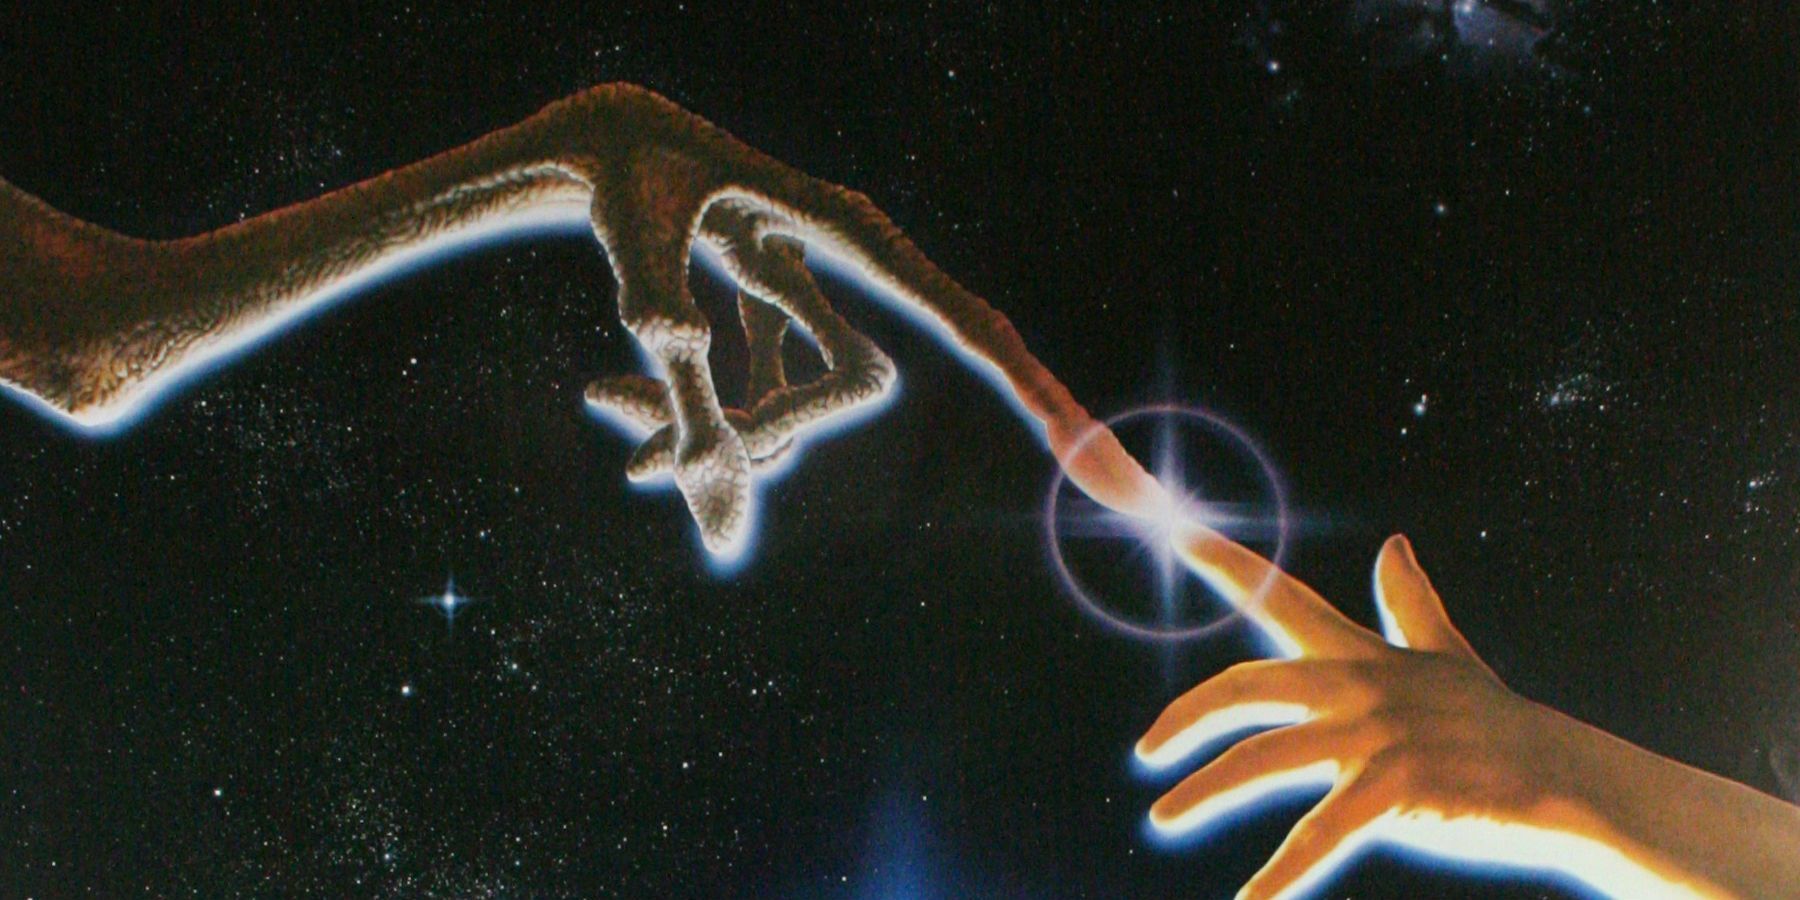 E.T. fingers touching image